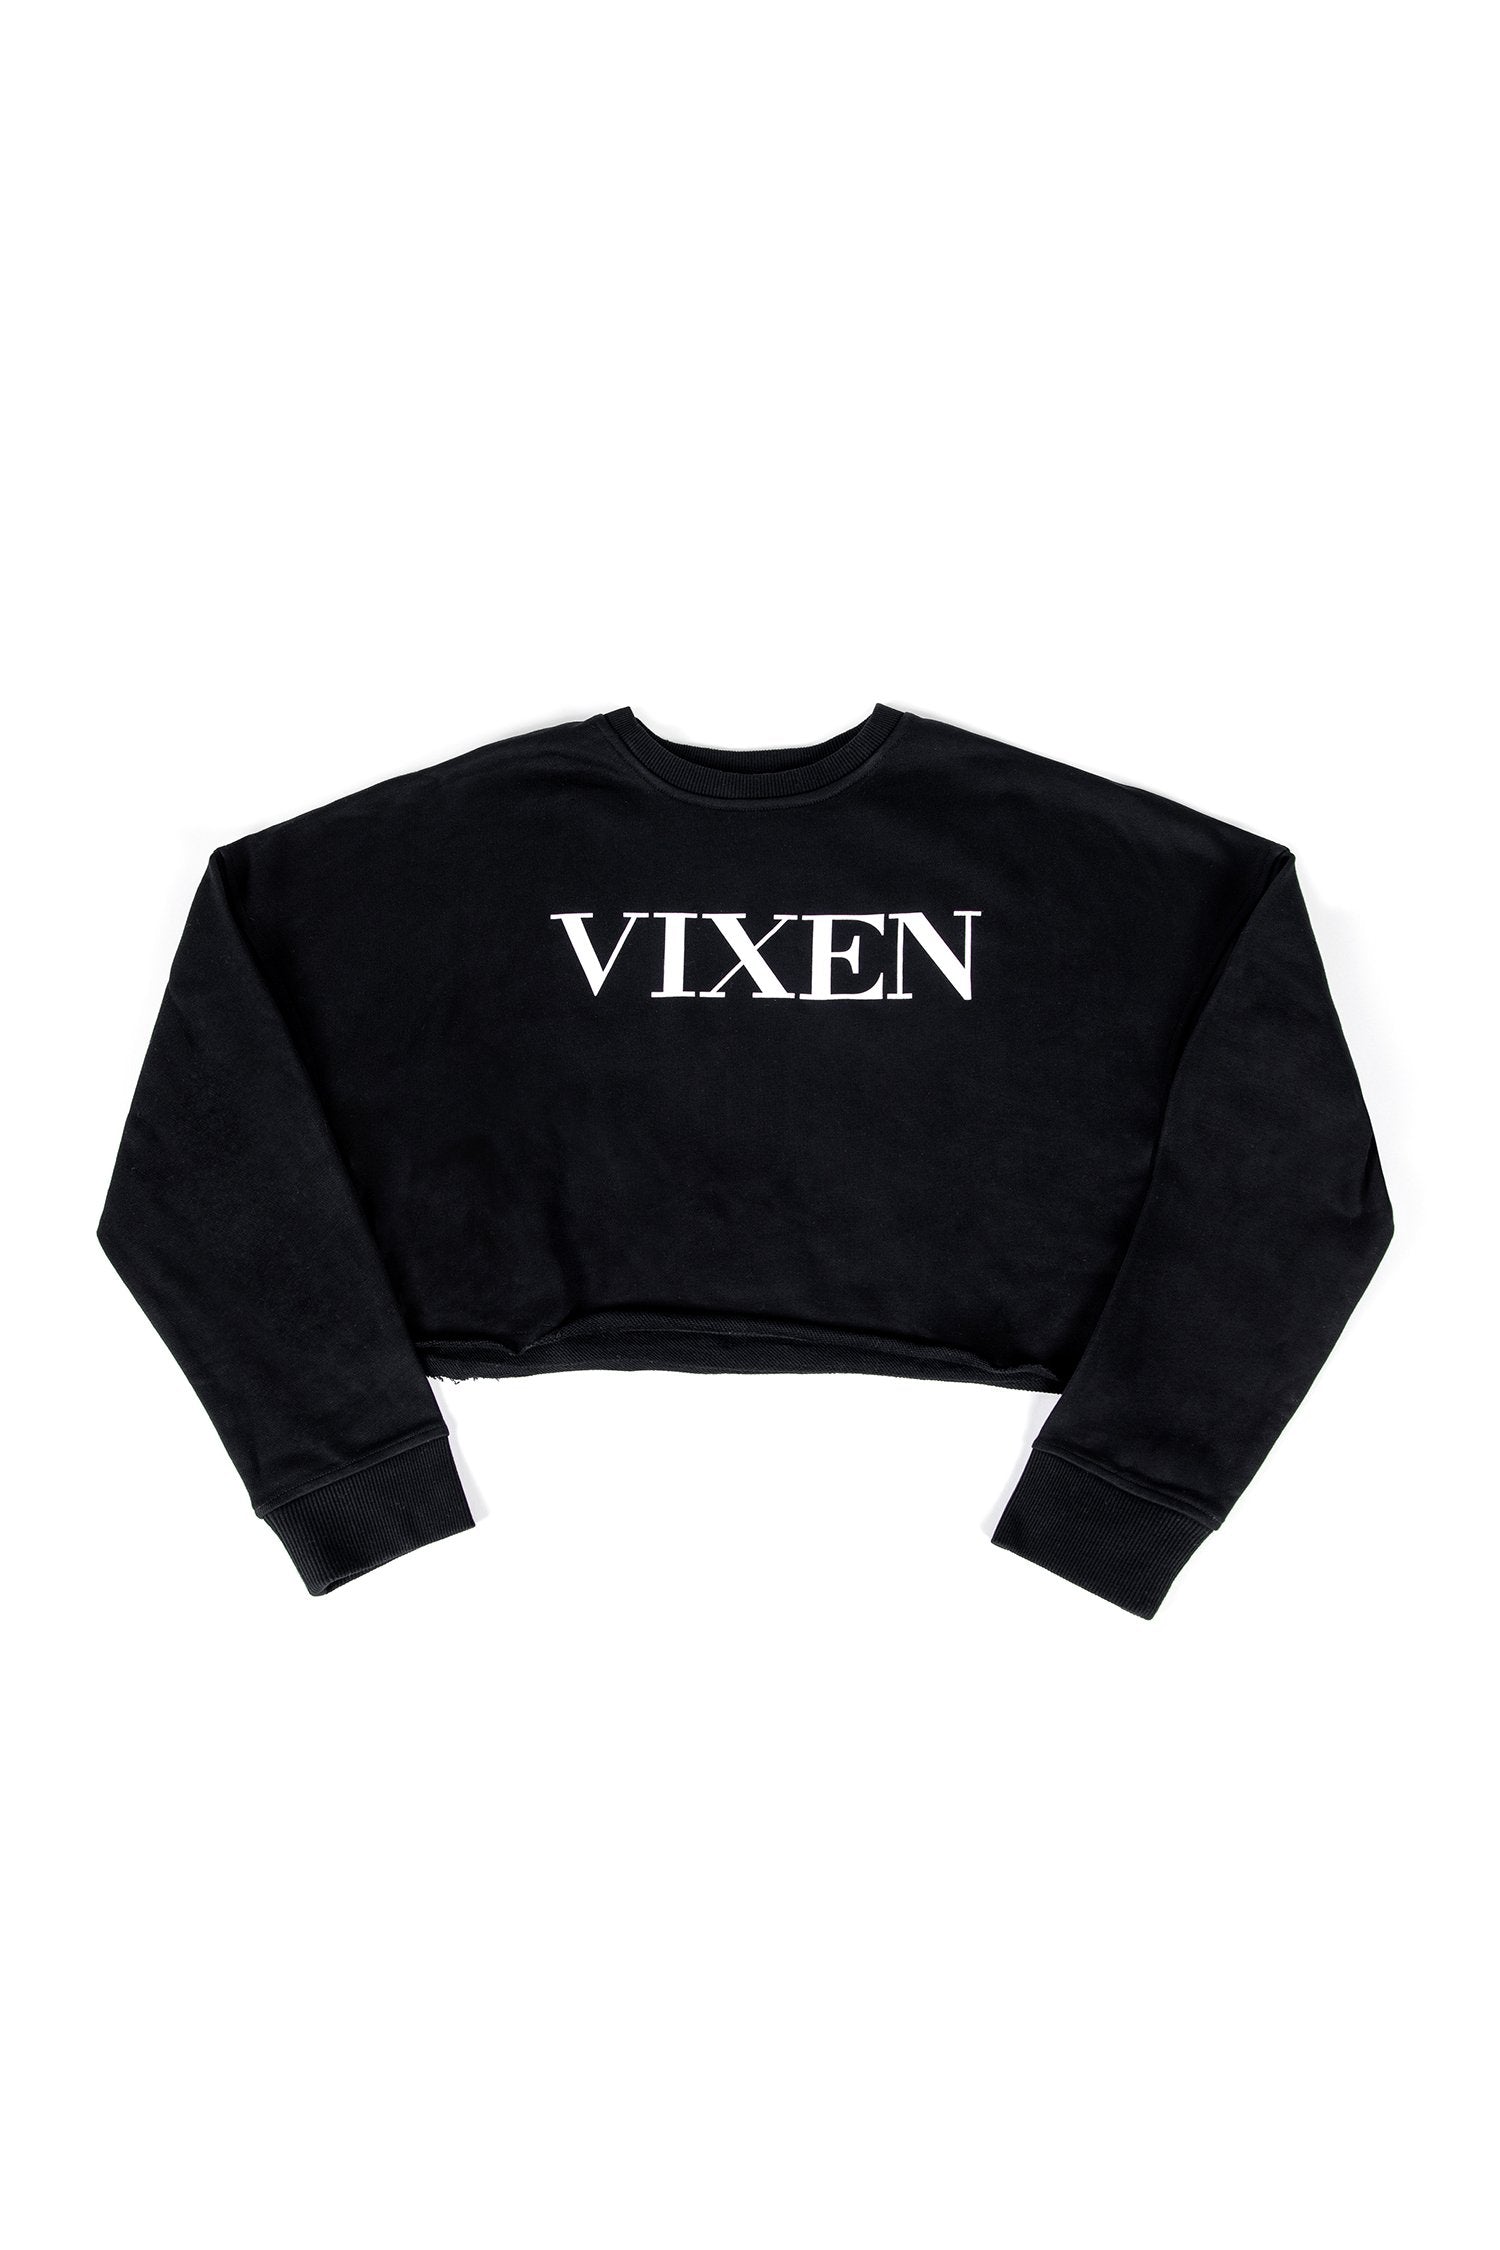 Vixen Cropped Loungewear Sweatshirt Sweatshirts VIXEN 